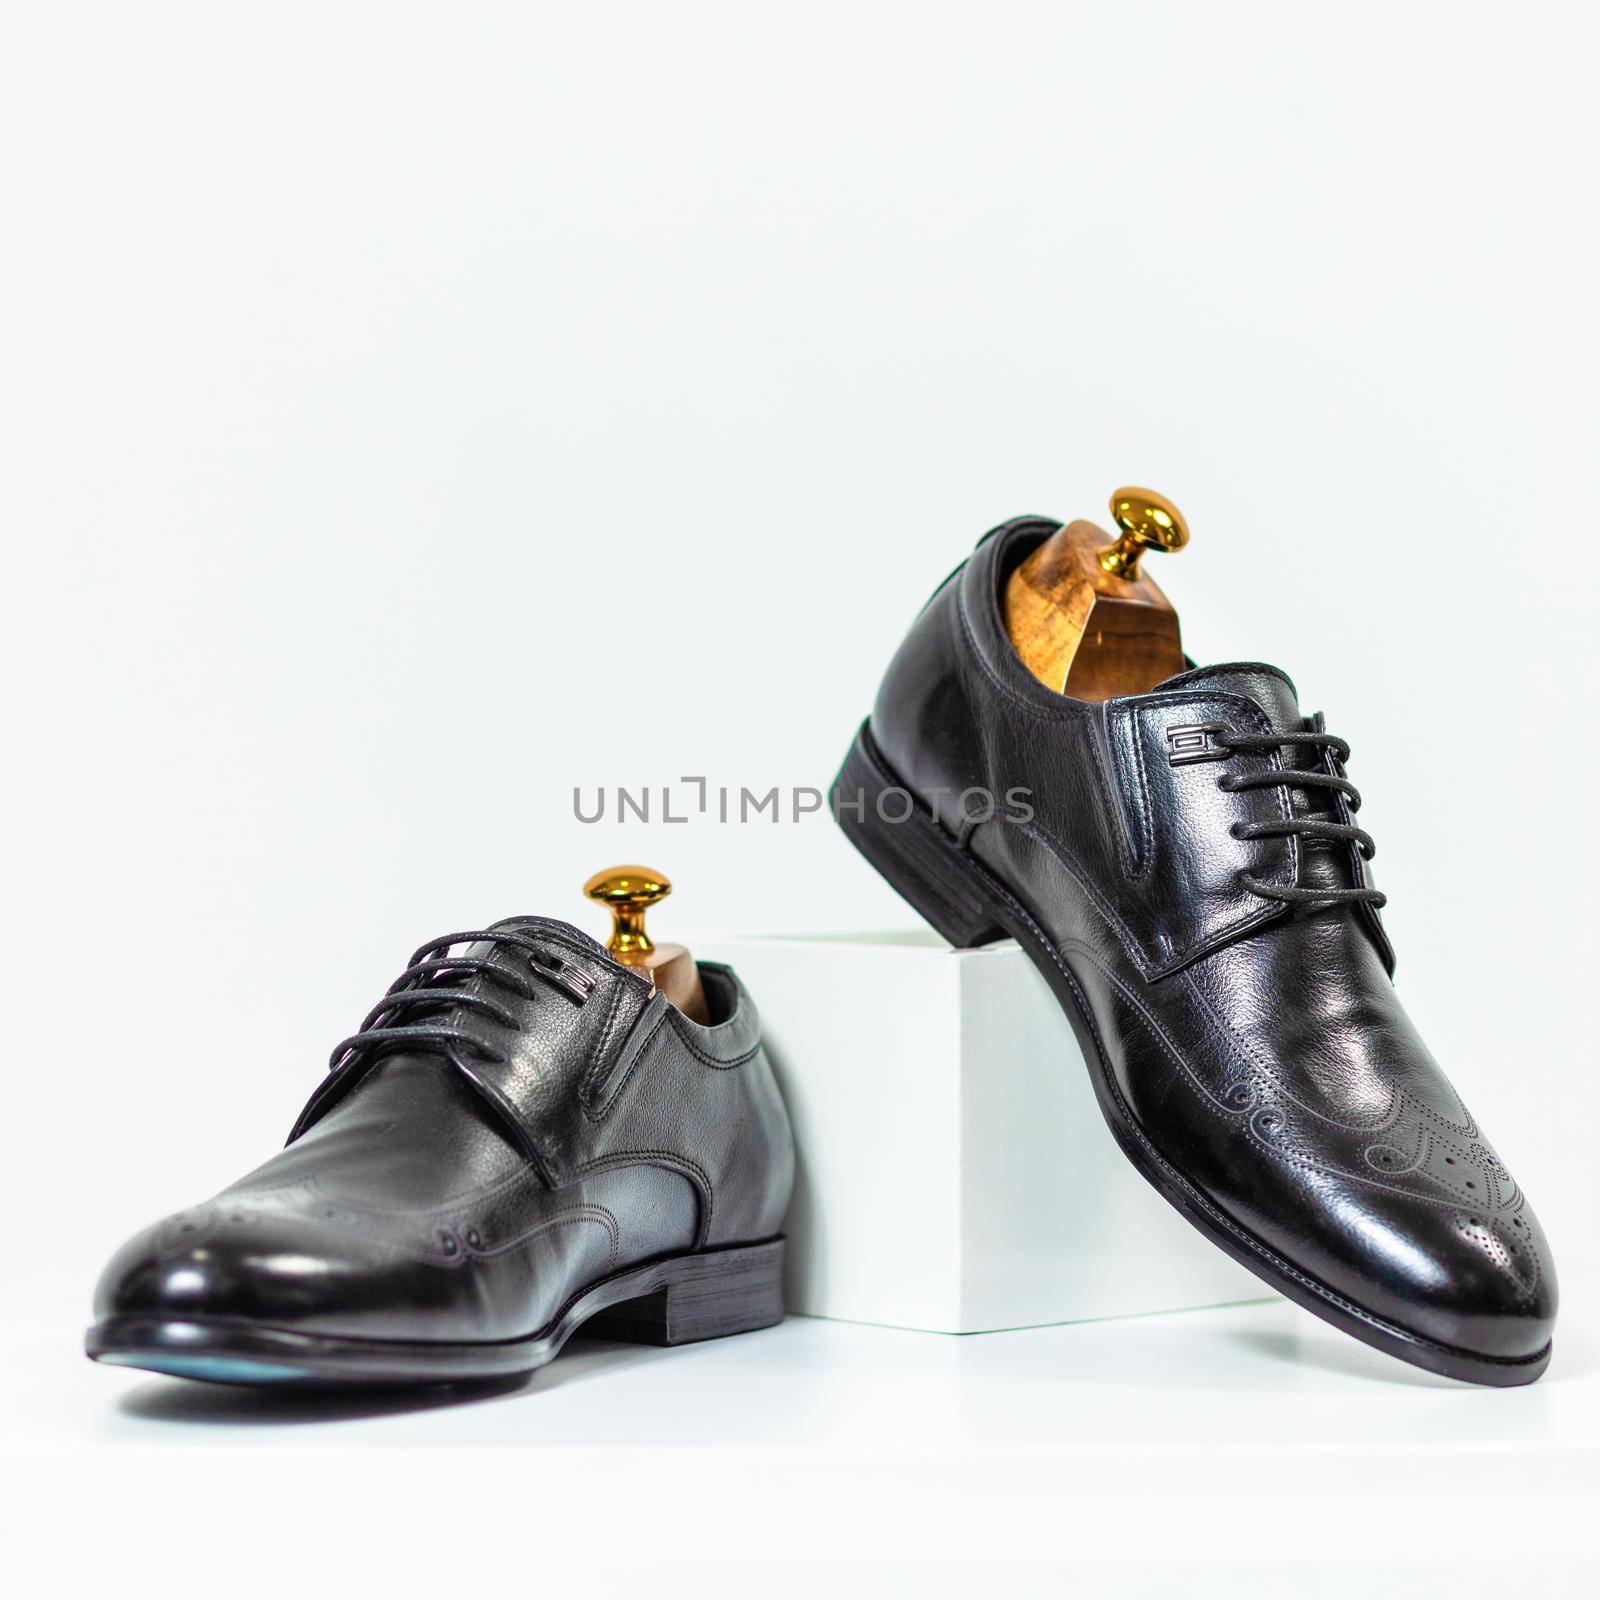 Men's classic black shoes close up by ferhad